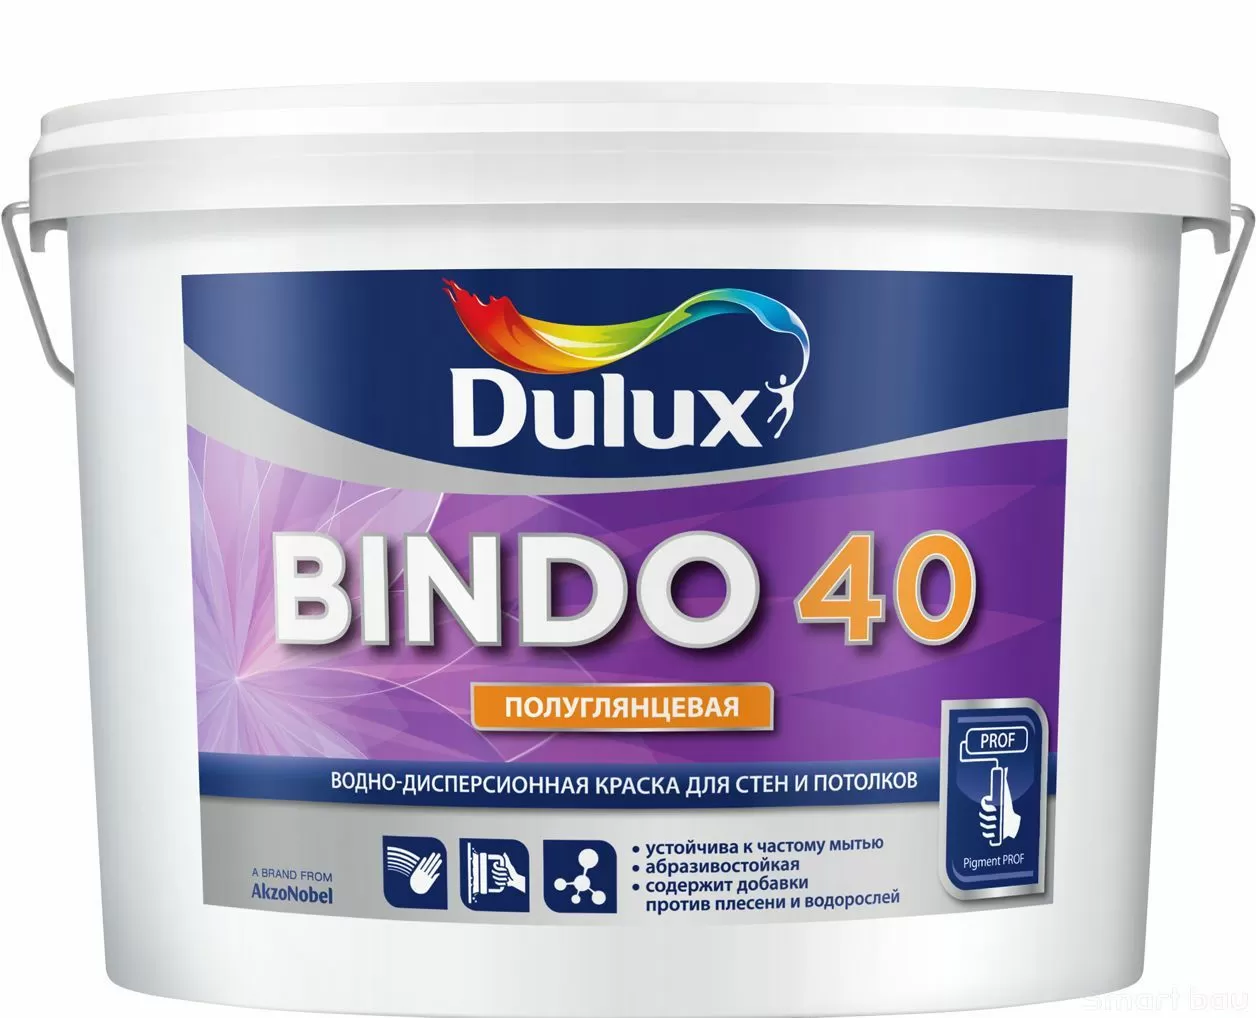 Краска для стен и потолков, полуглянцевая Dulux Bindo 40 фото